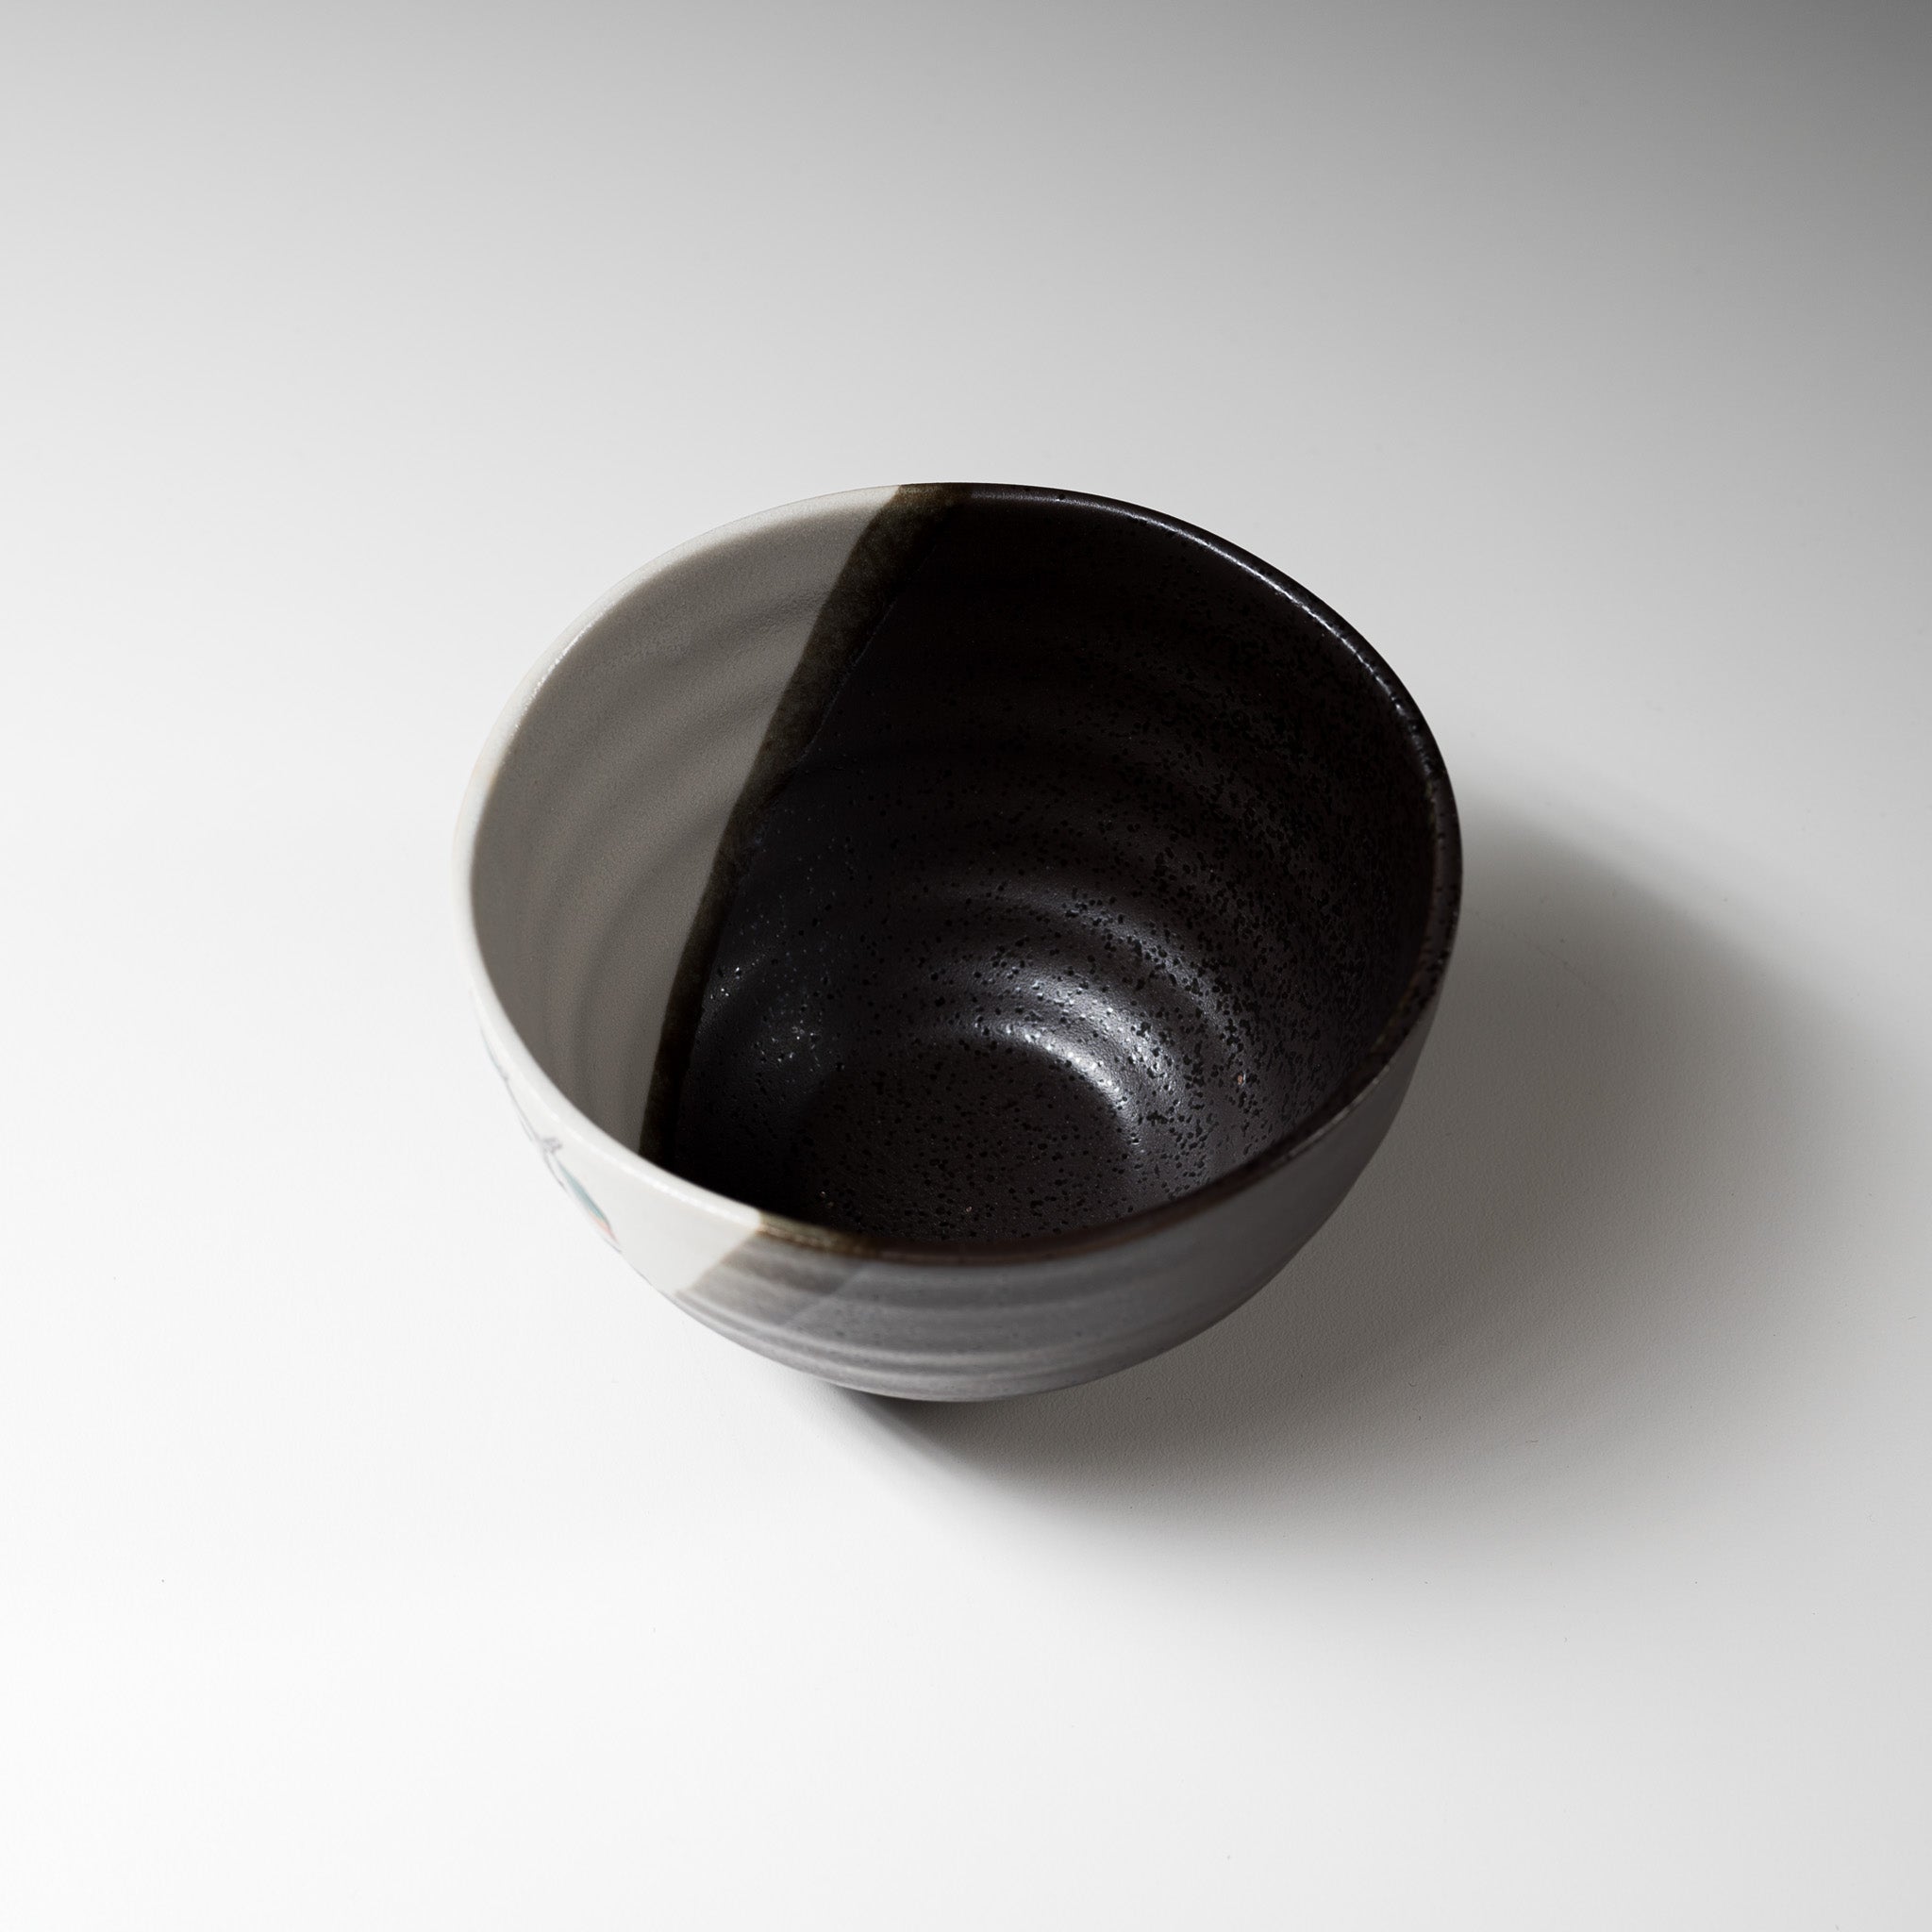 Kutani ware Large Rice Bowl - Owl / 九谷焼 茶碗